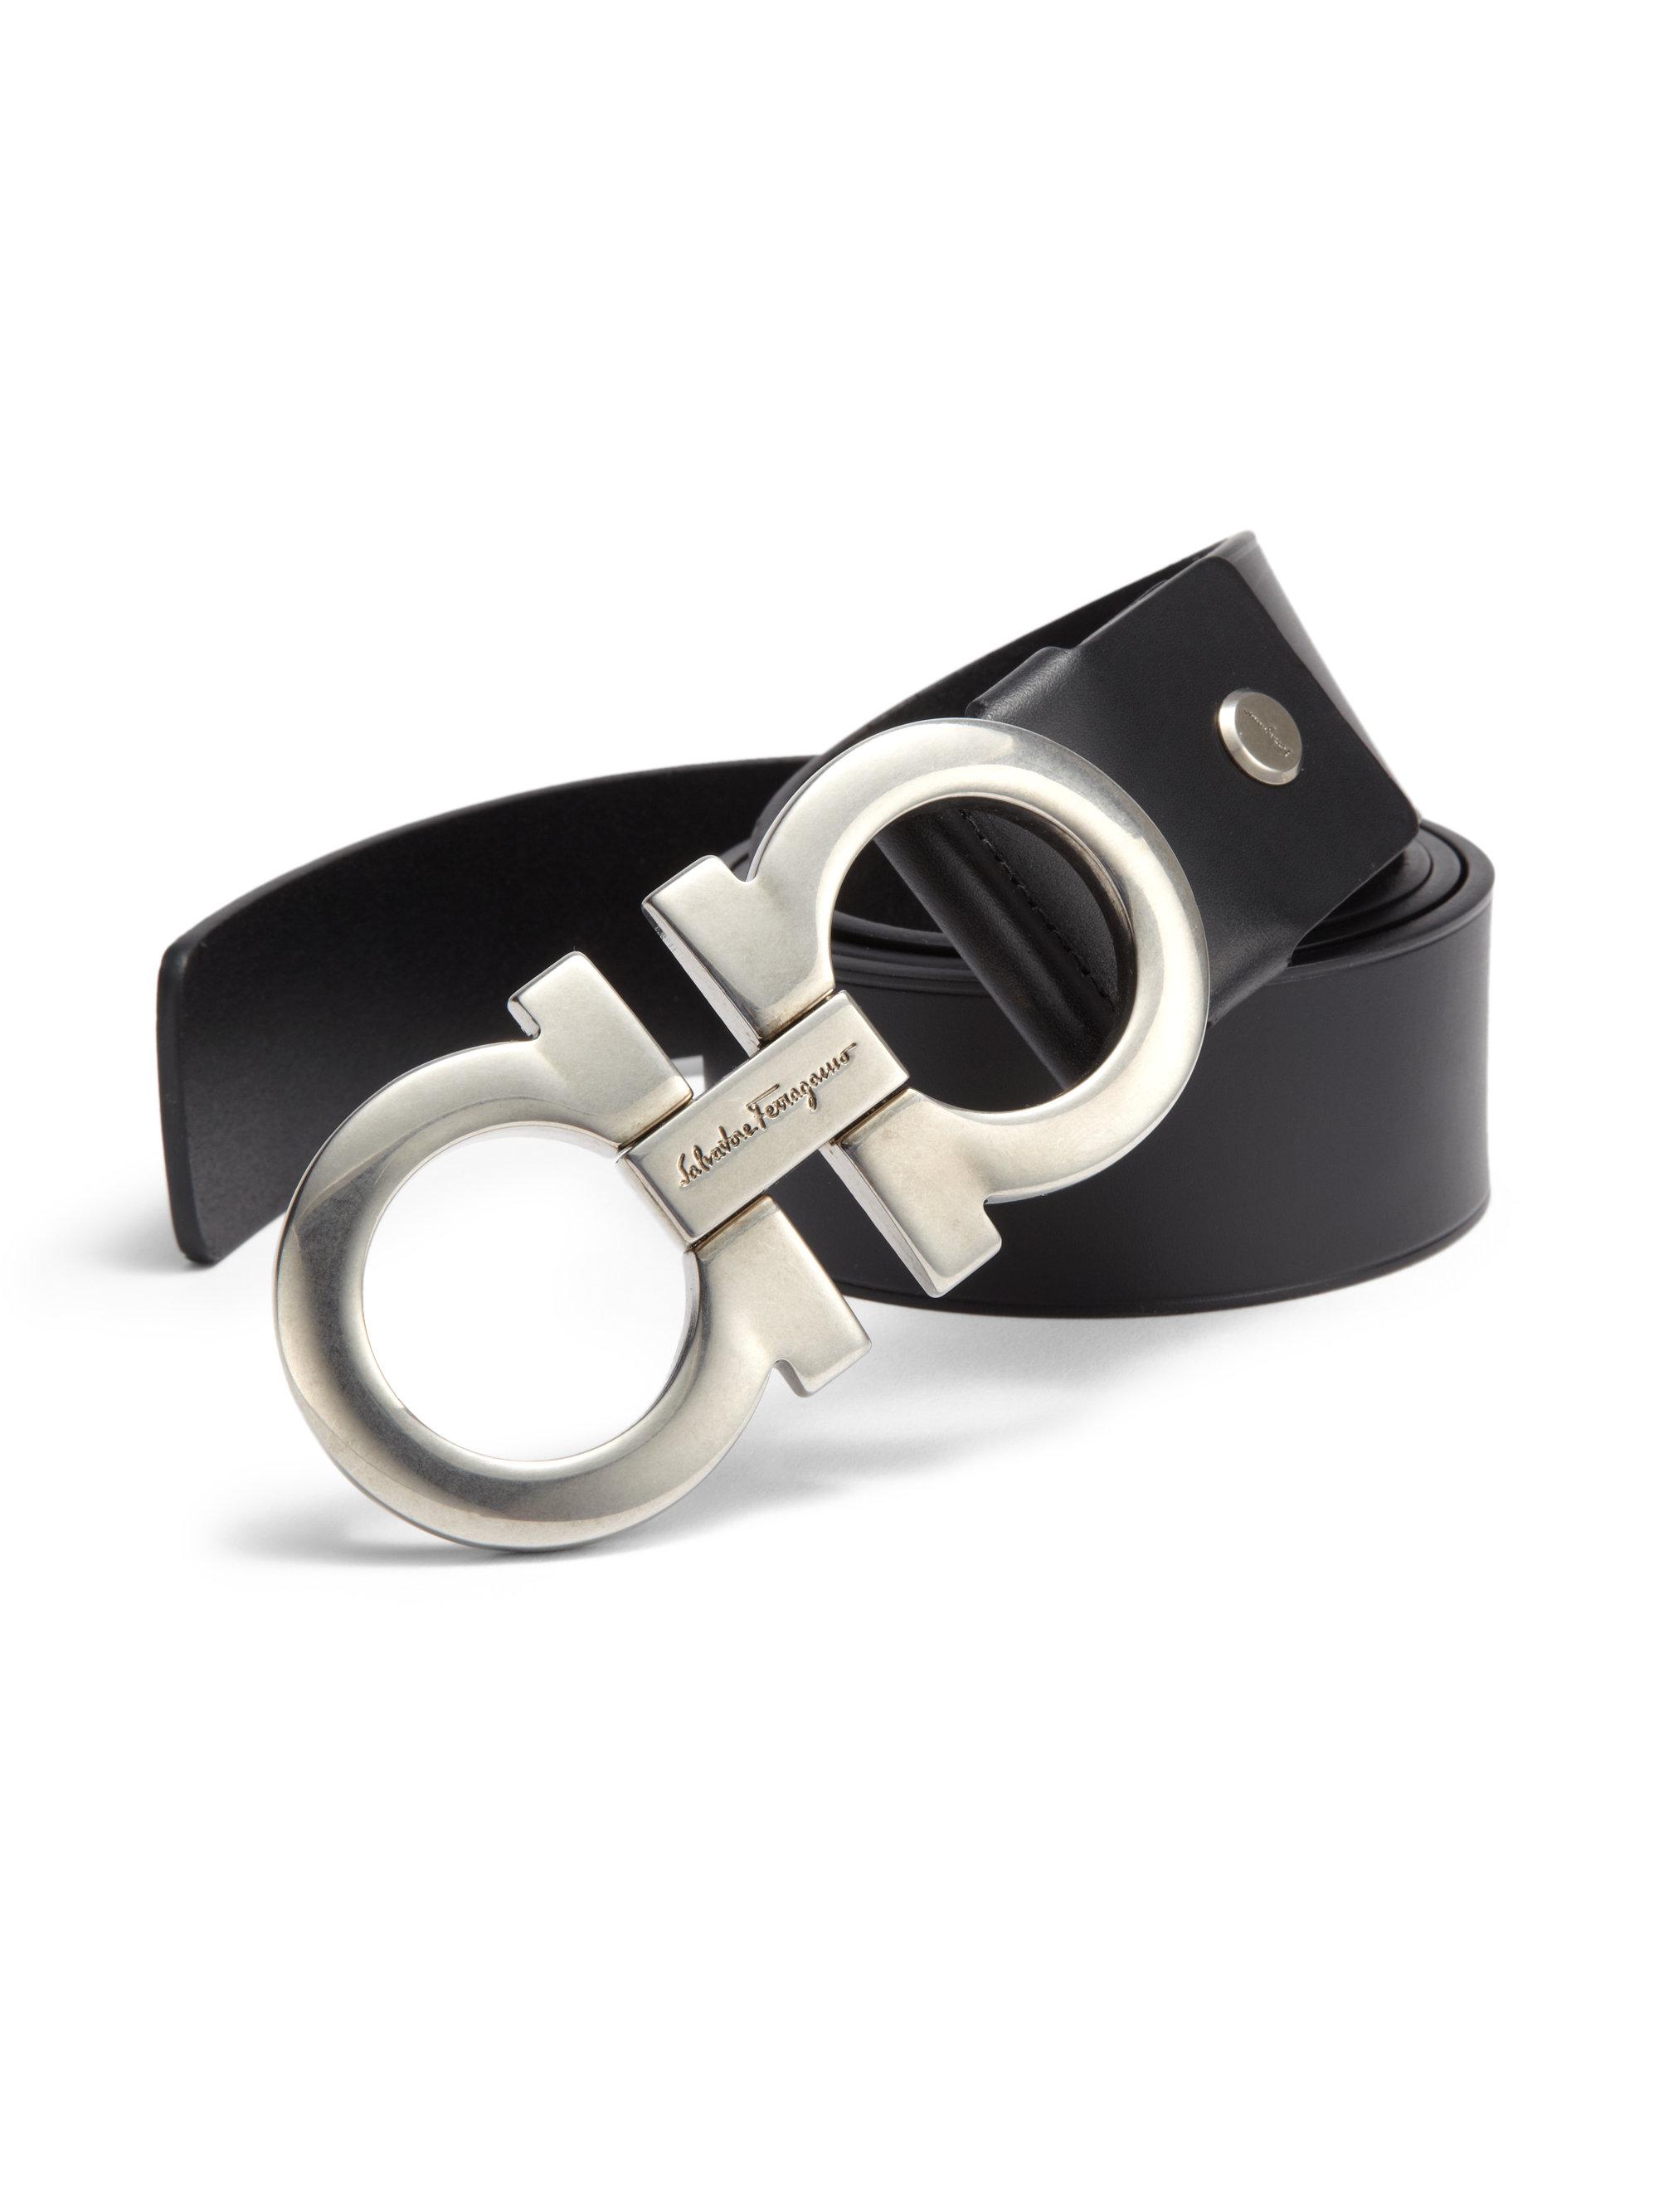 Ferragamo Adjustable Rubino Leather Belt in Black for Men - Lyst